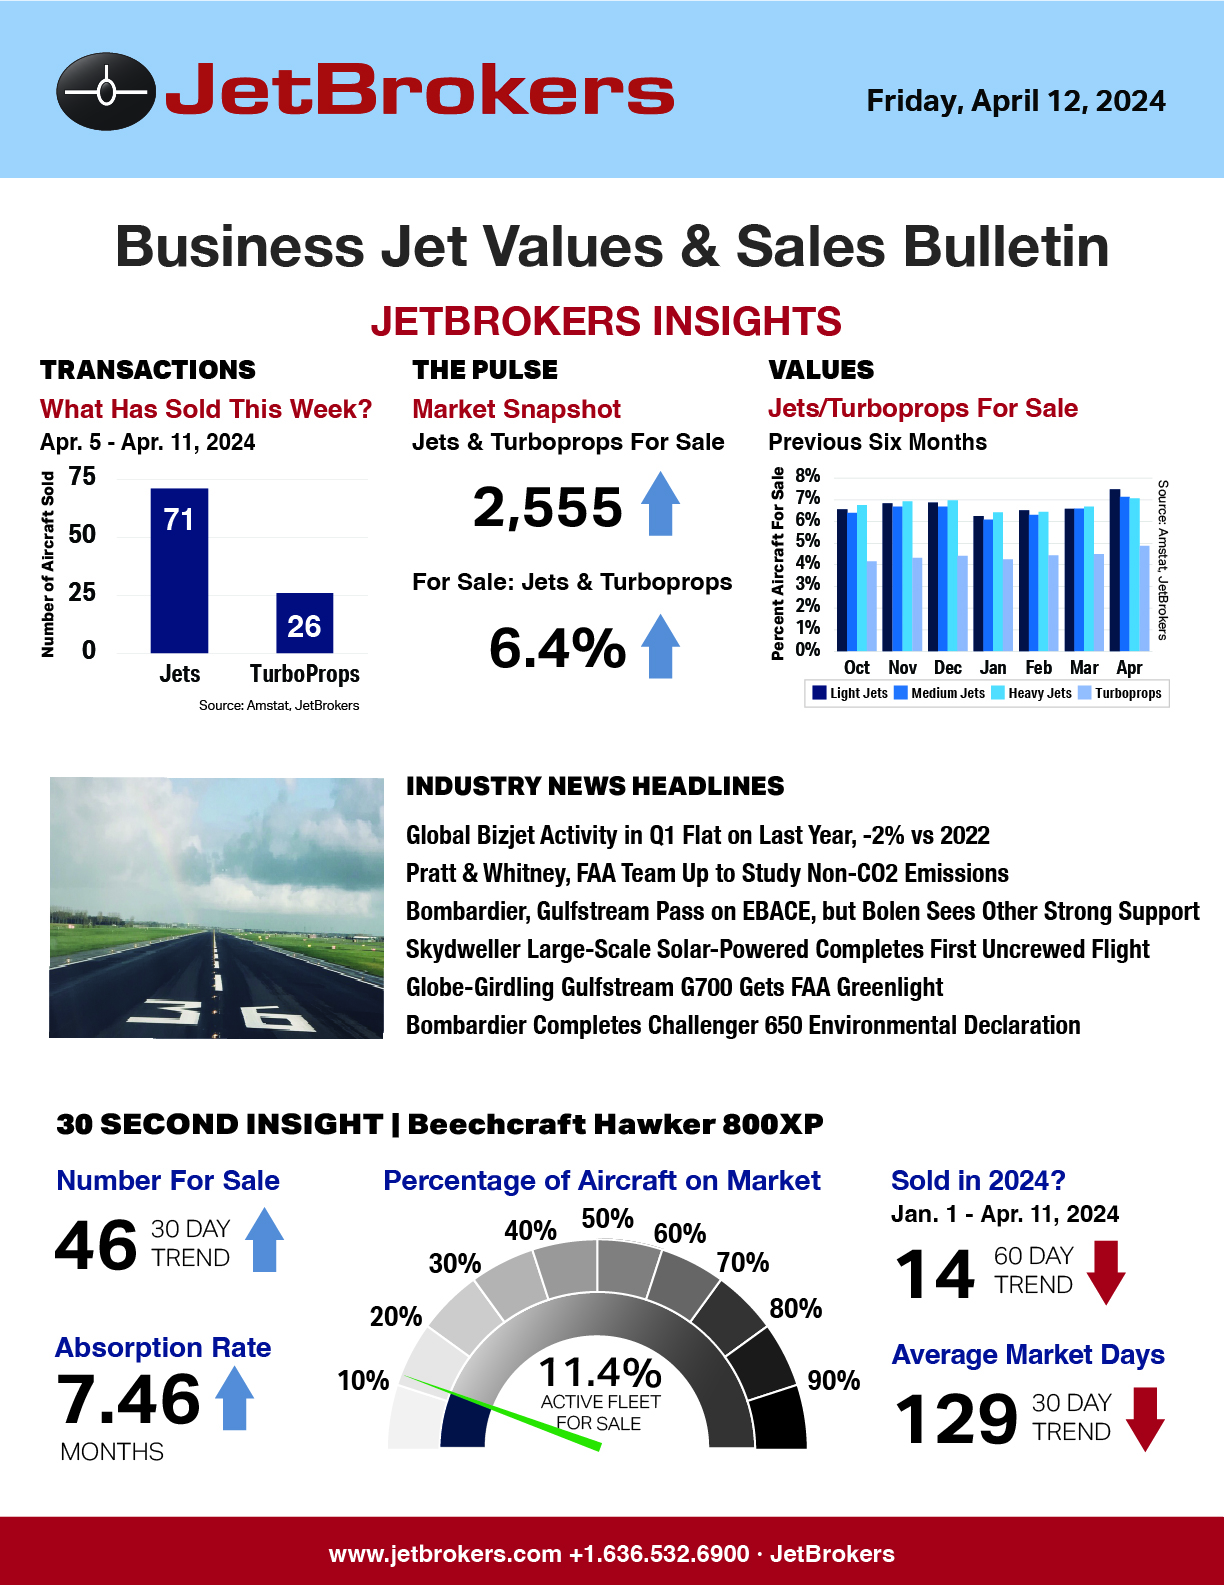 JetBrokers Business Jet Values & Sales Bulletin - April 12, 2024